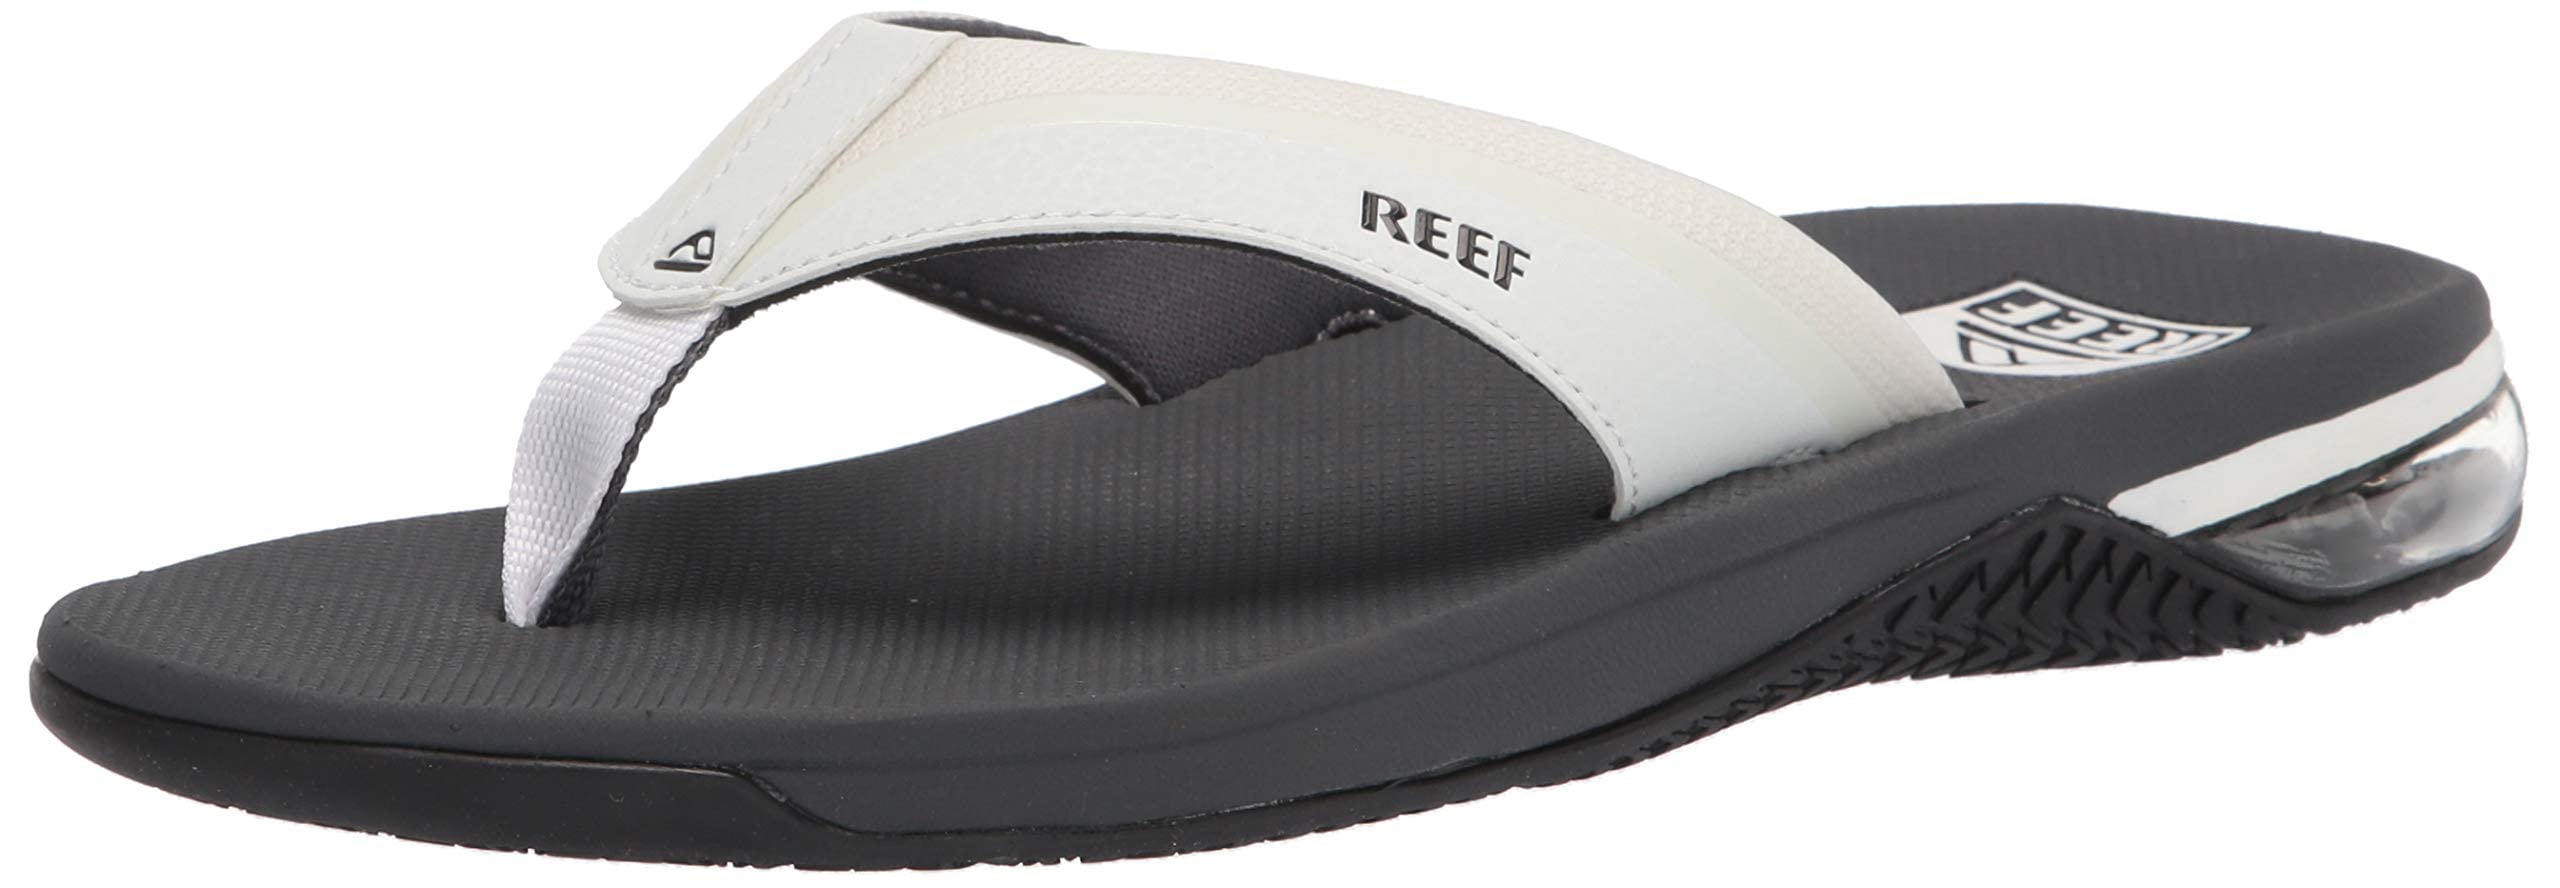 Reef Men's Anchor Flip-Flop